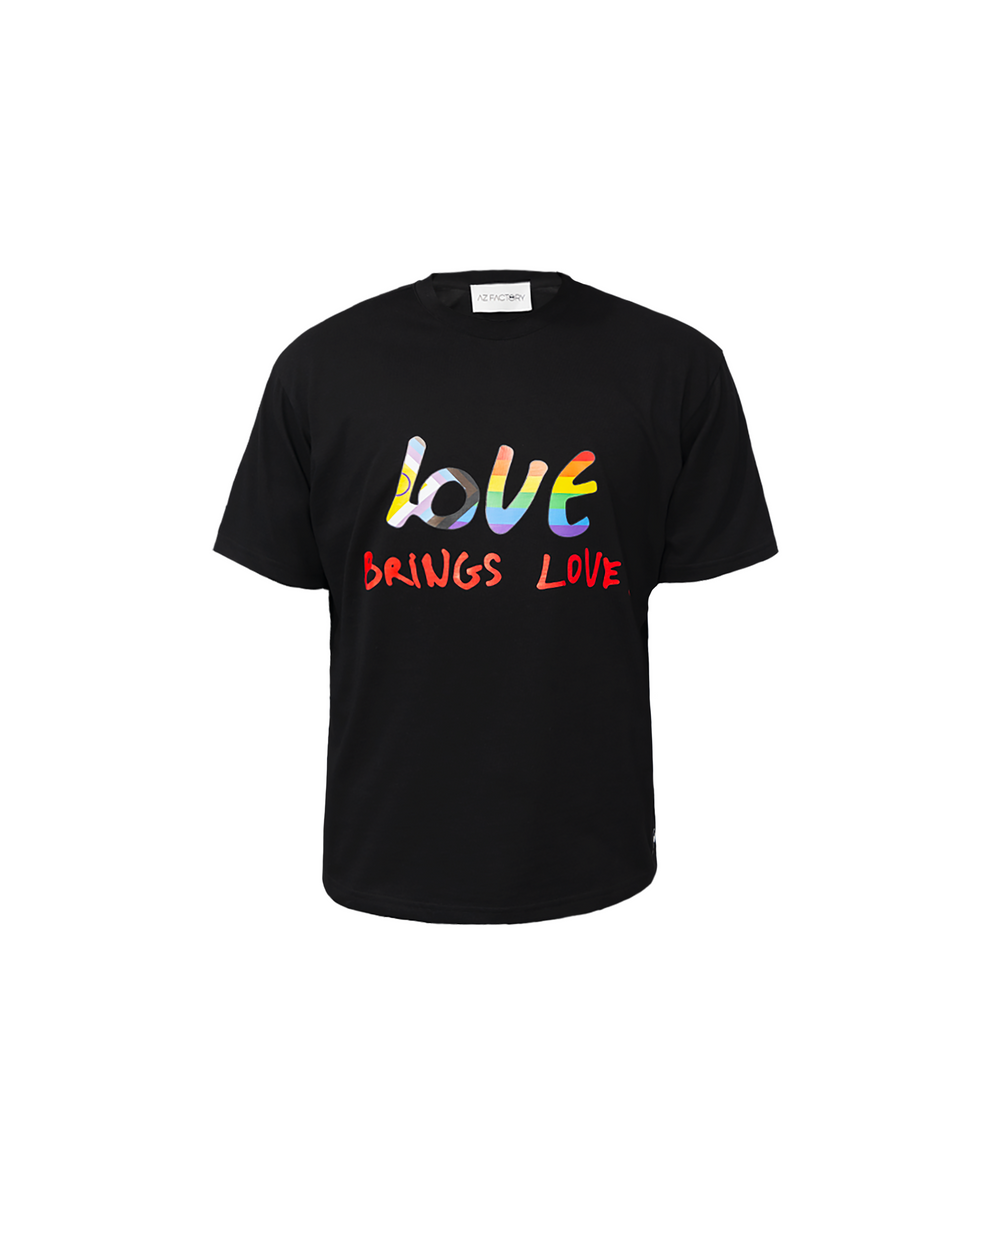 LOVE BRINGS LOVE PRIDE T-SHIRT - MULTICOLOR / BLACK - AZ Factory